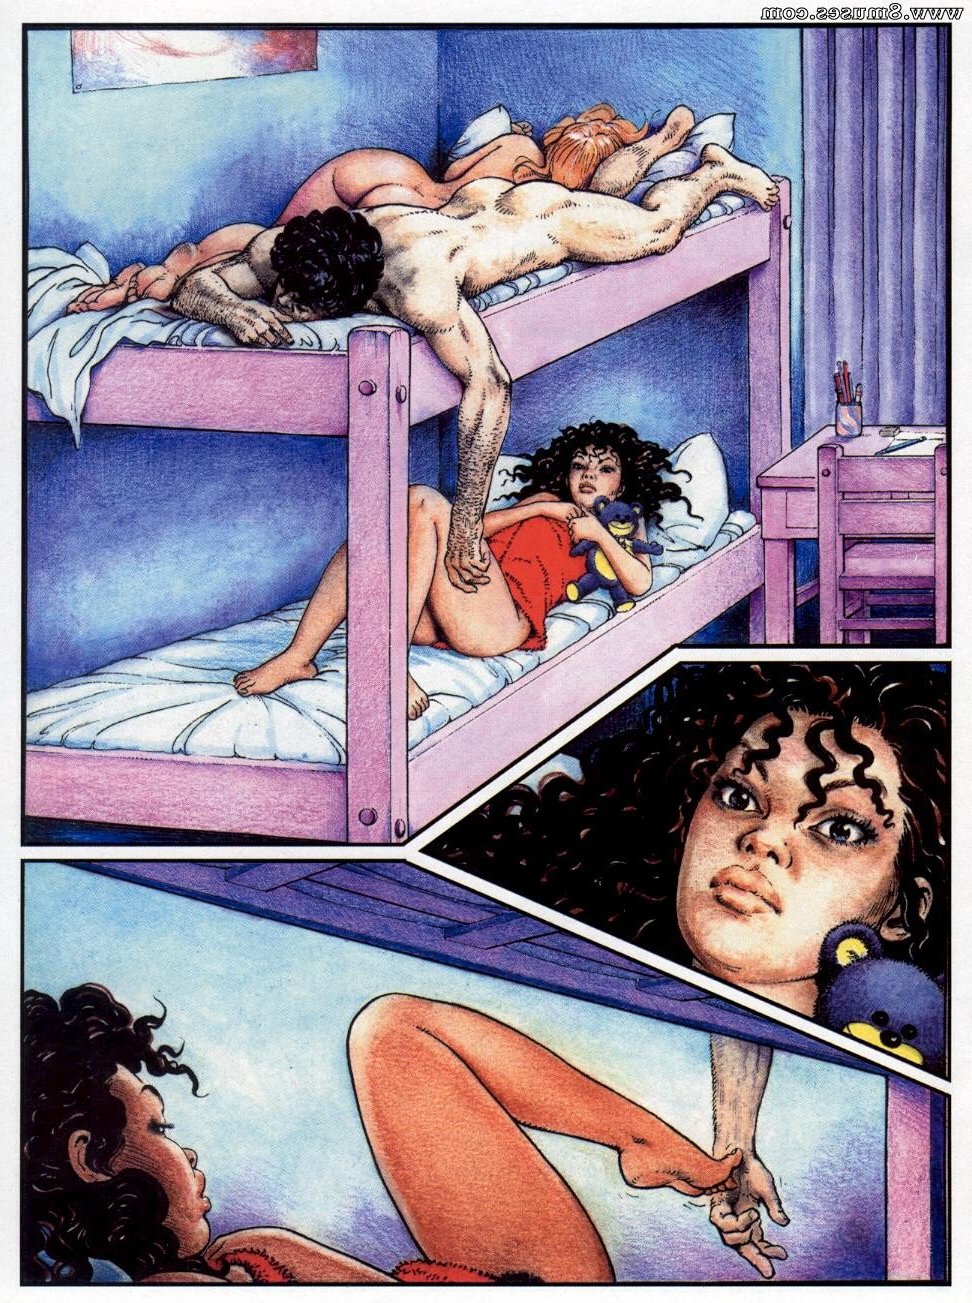 Erotic free comic